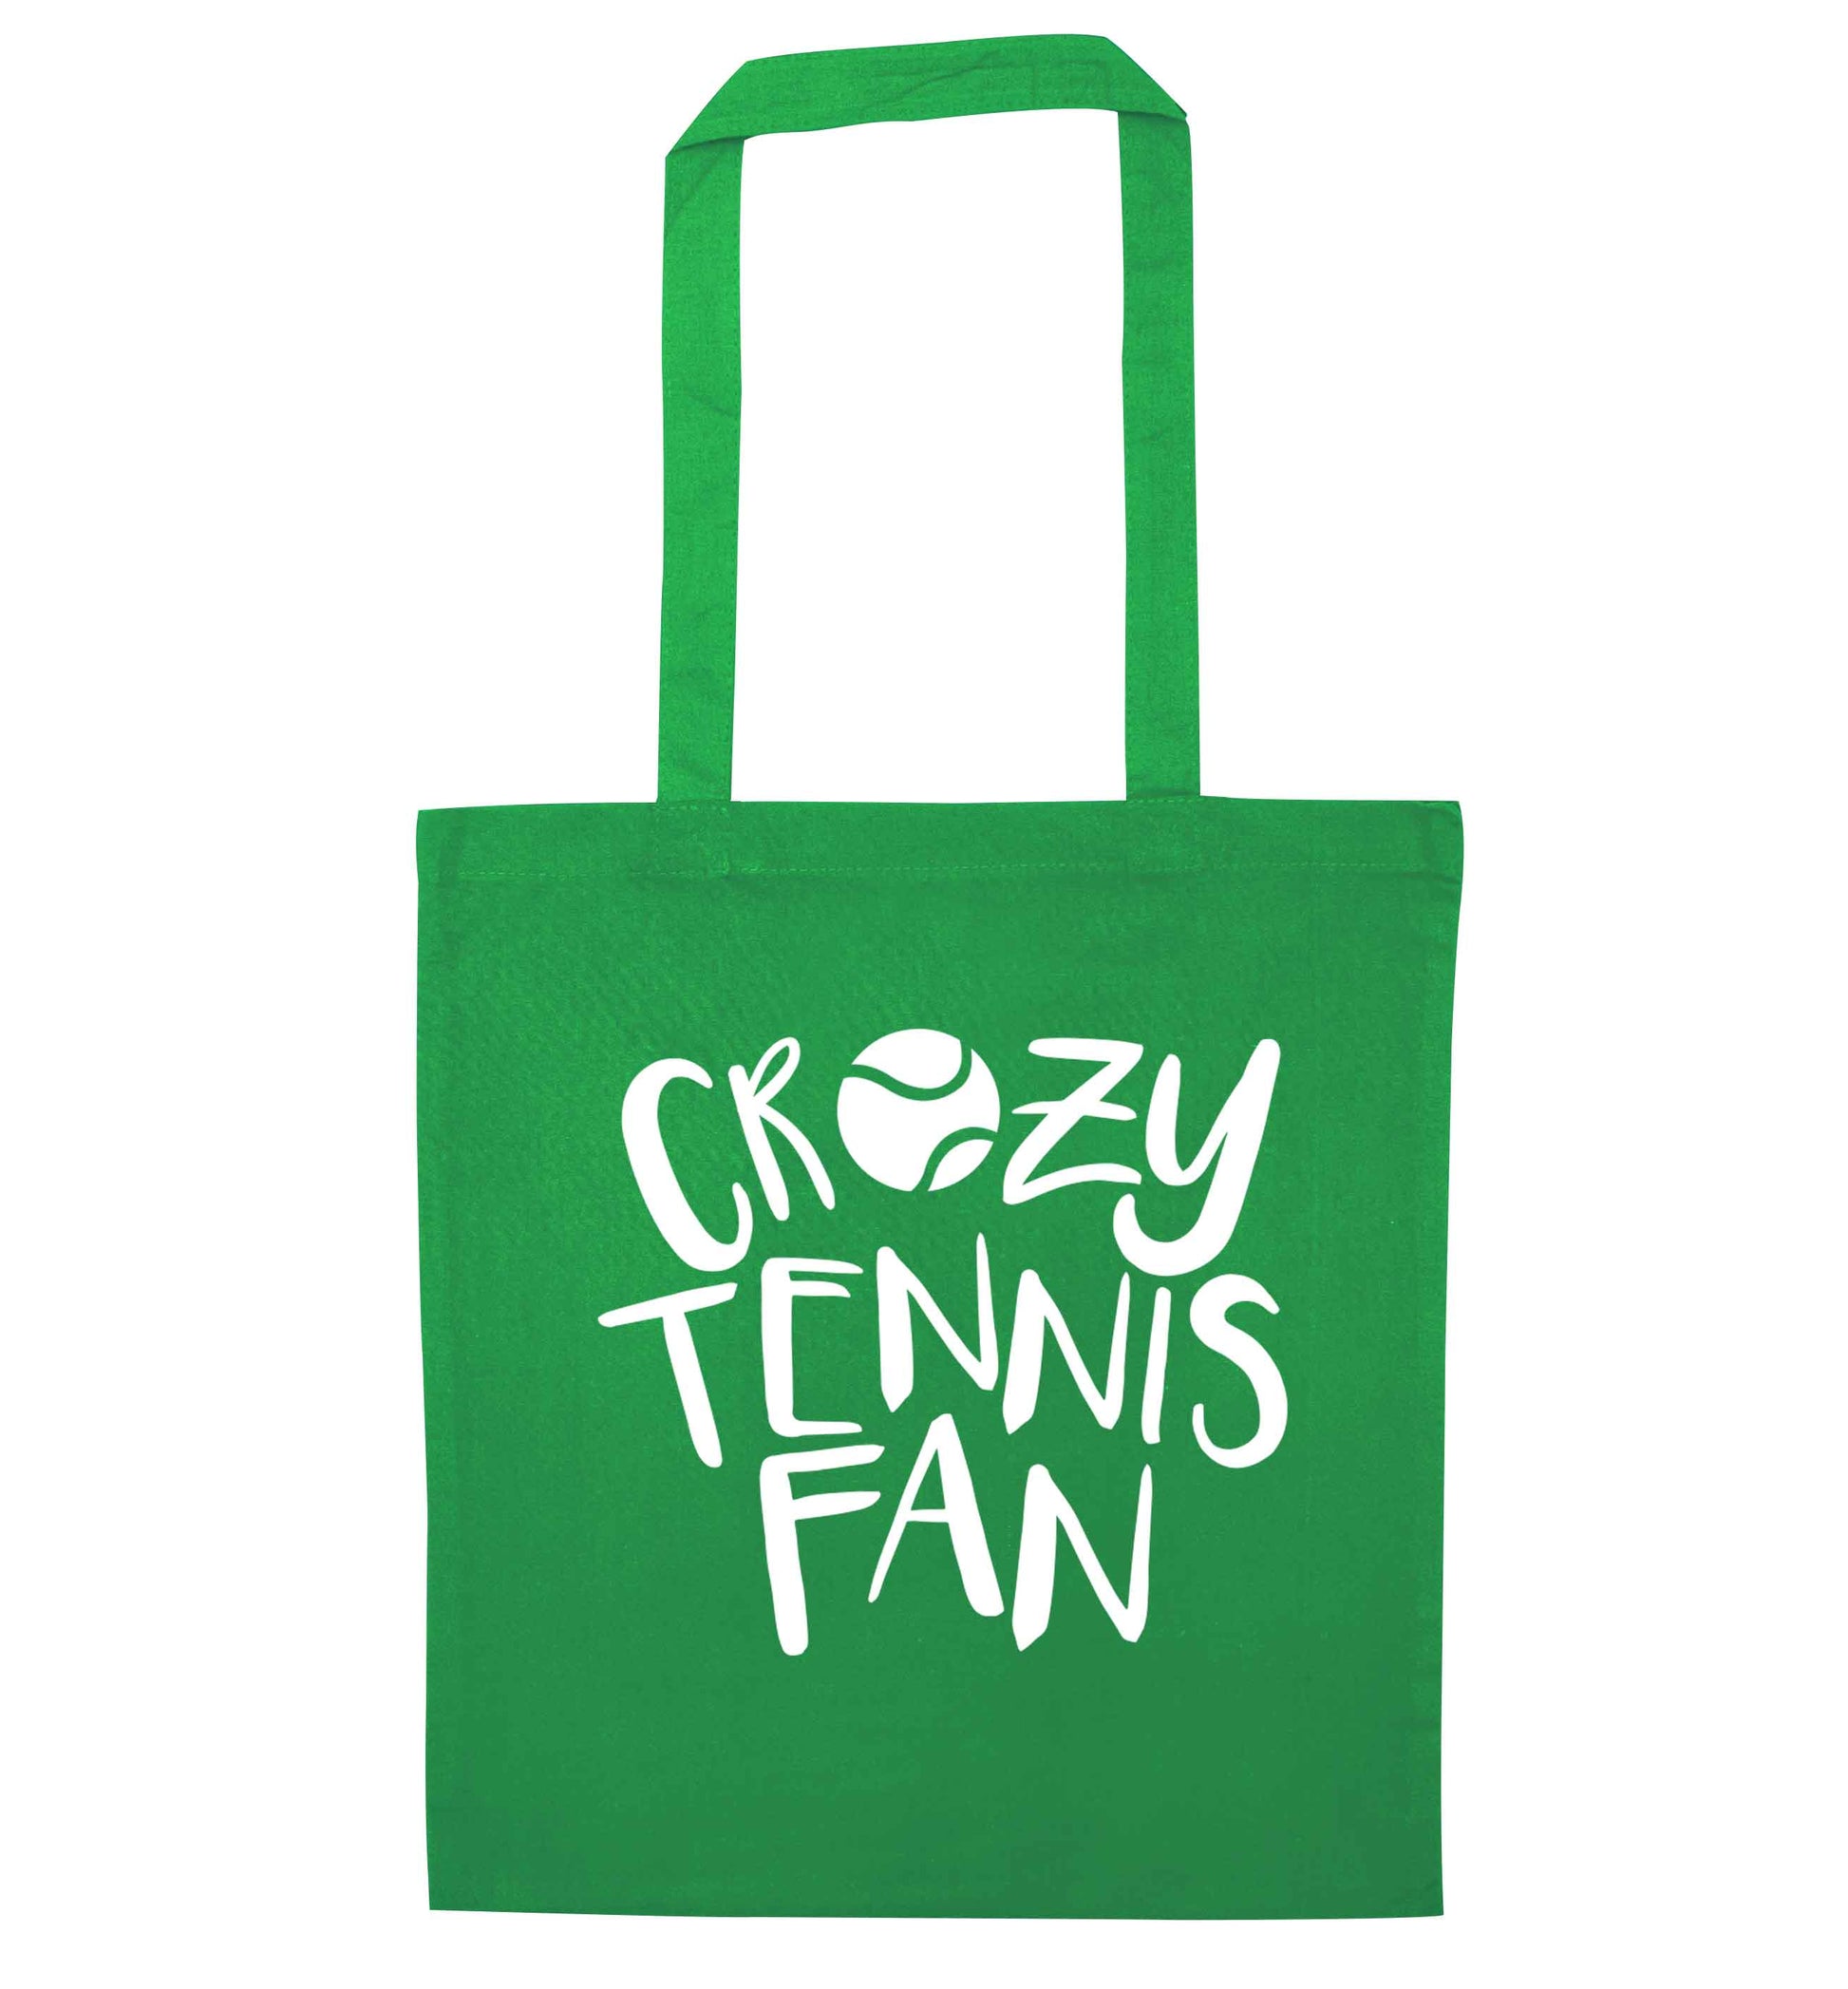 Crazy tennis fan green tote bag